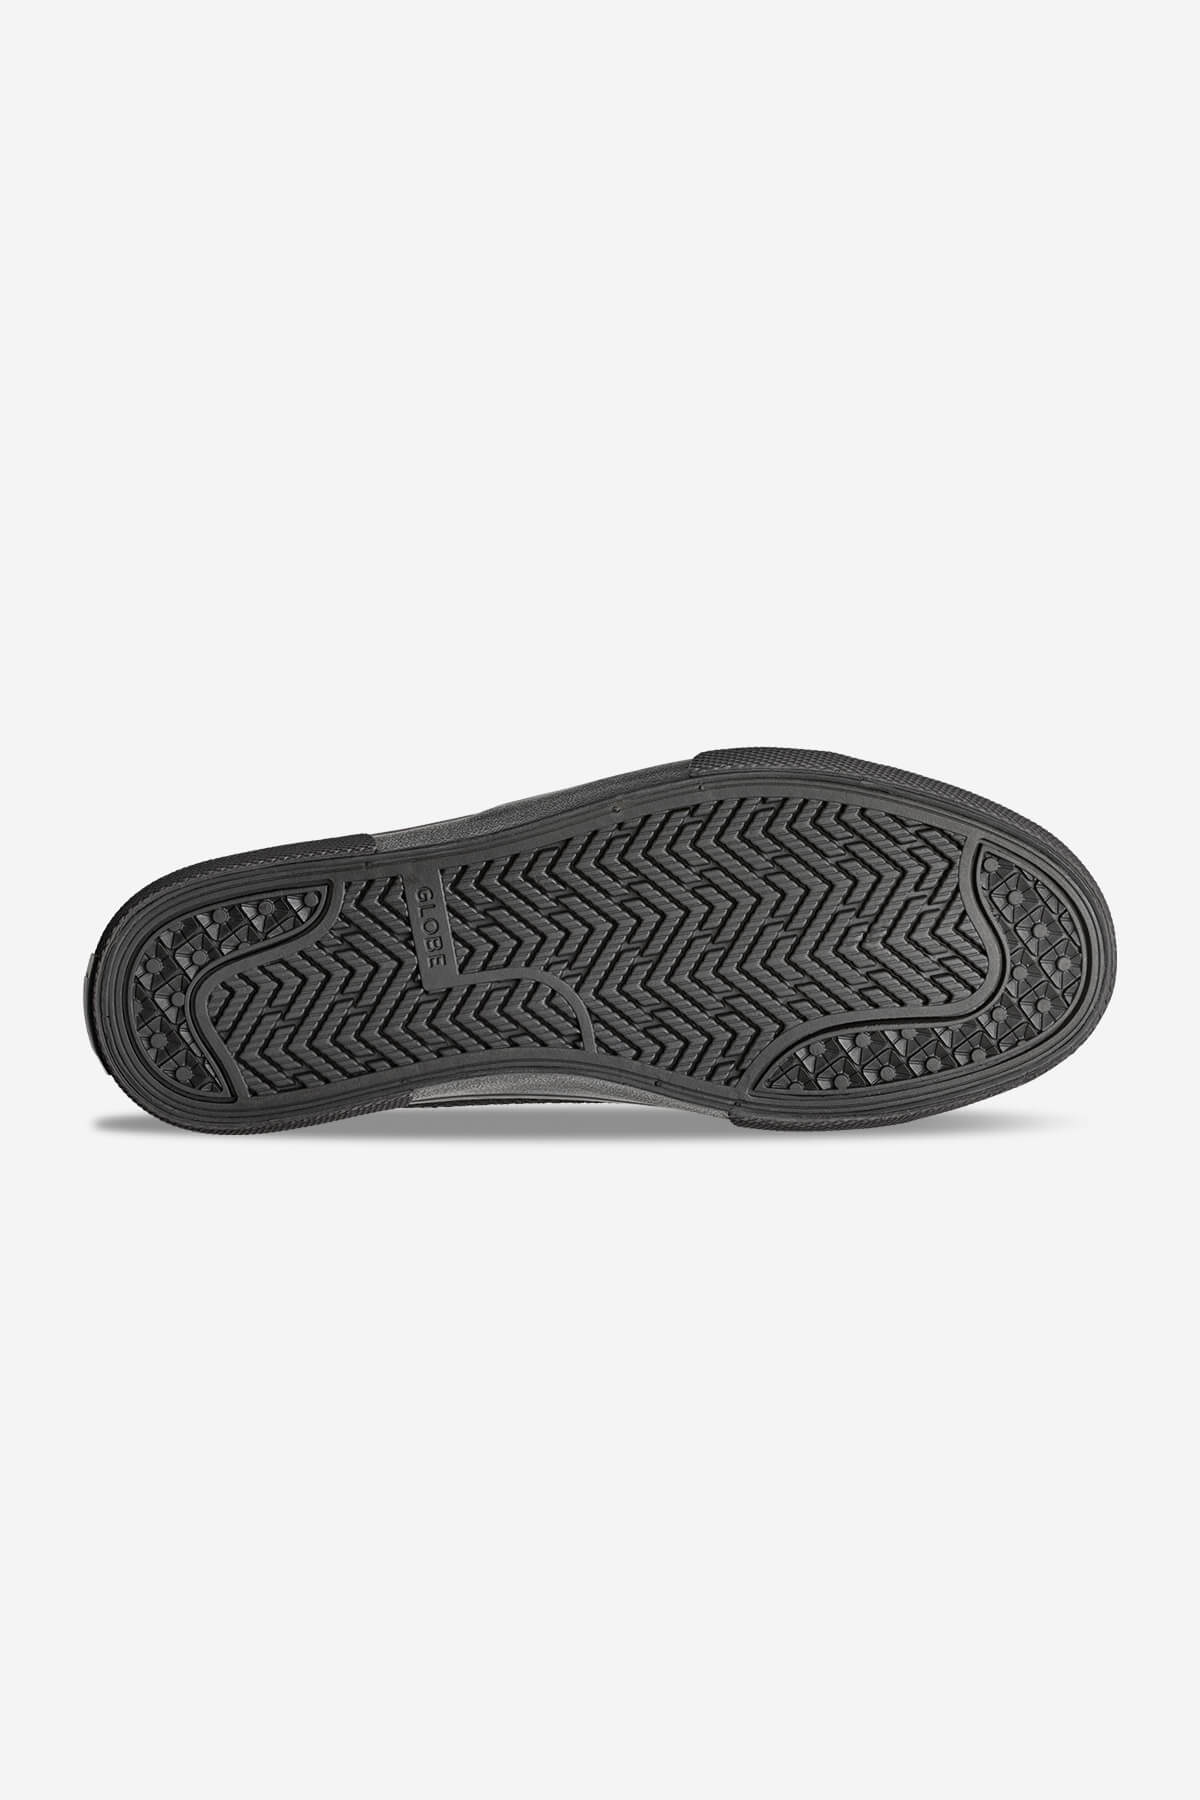 Globe - Surplus - Knit Preto/Knit/Preto - skateboard Sapatos